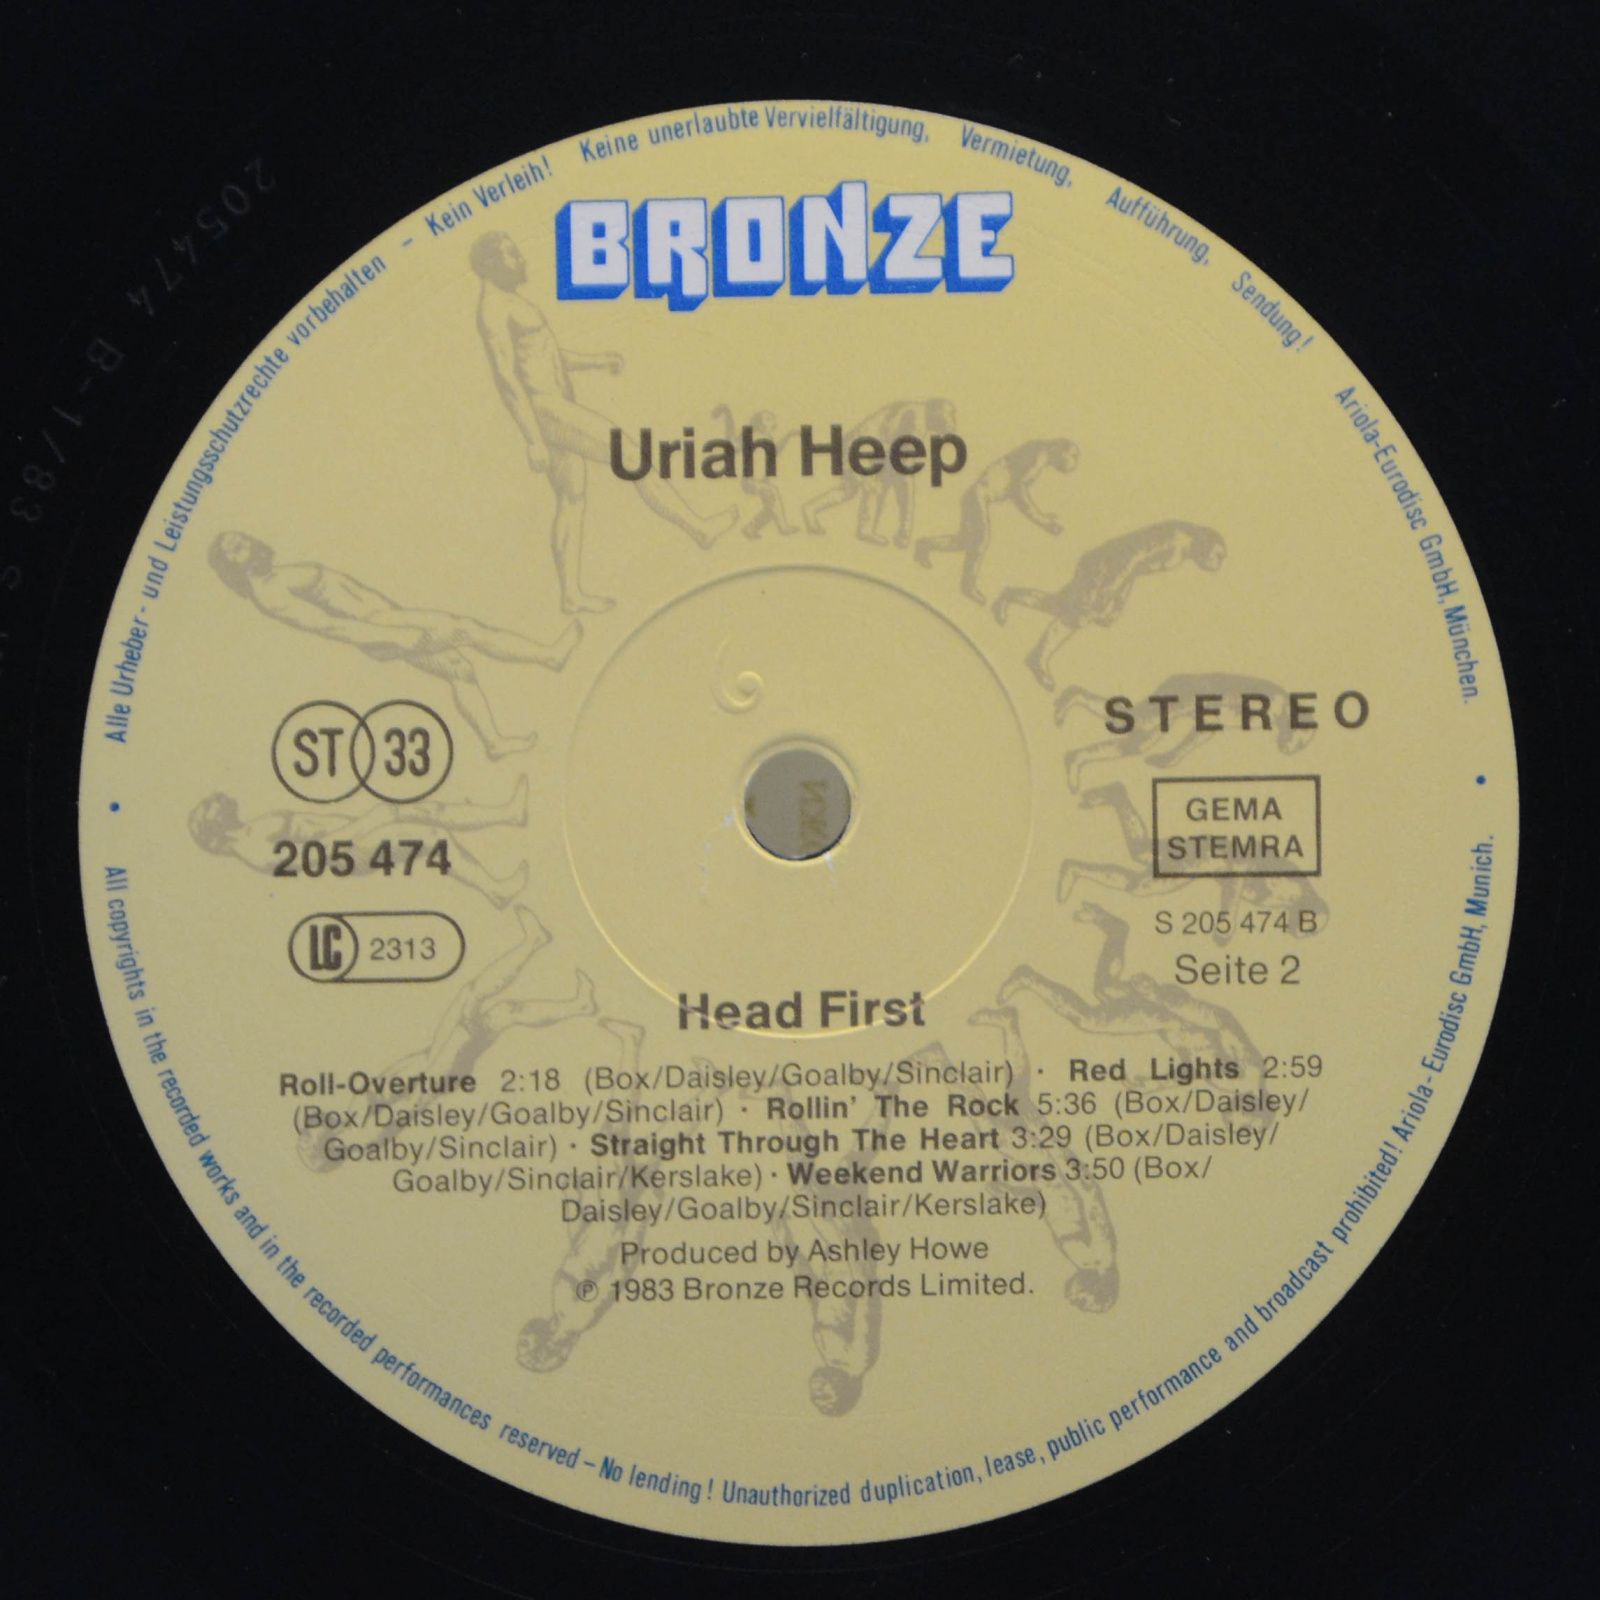 Uriah Heep — Head First, 1983